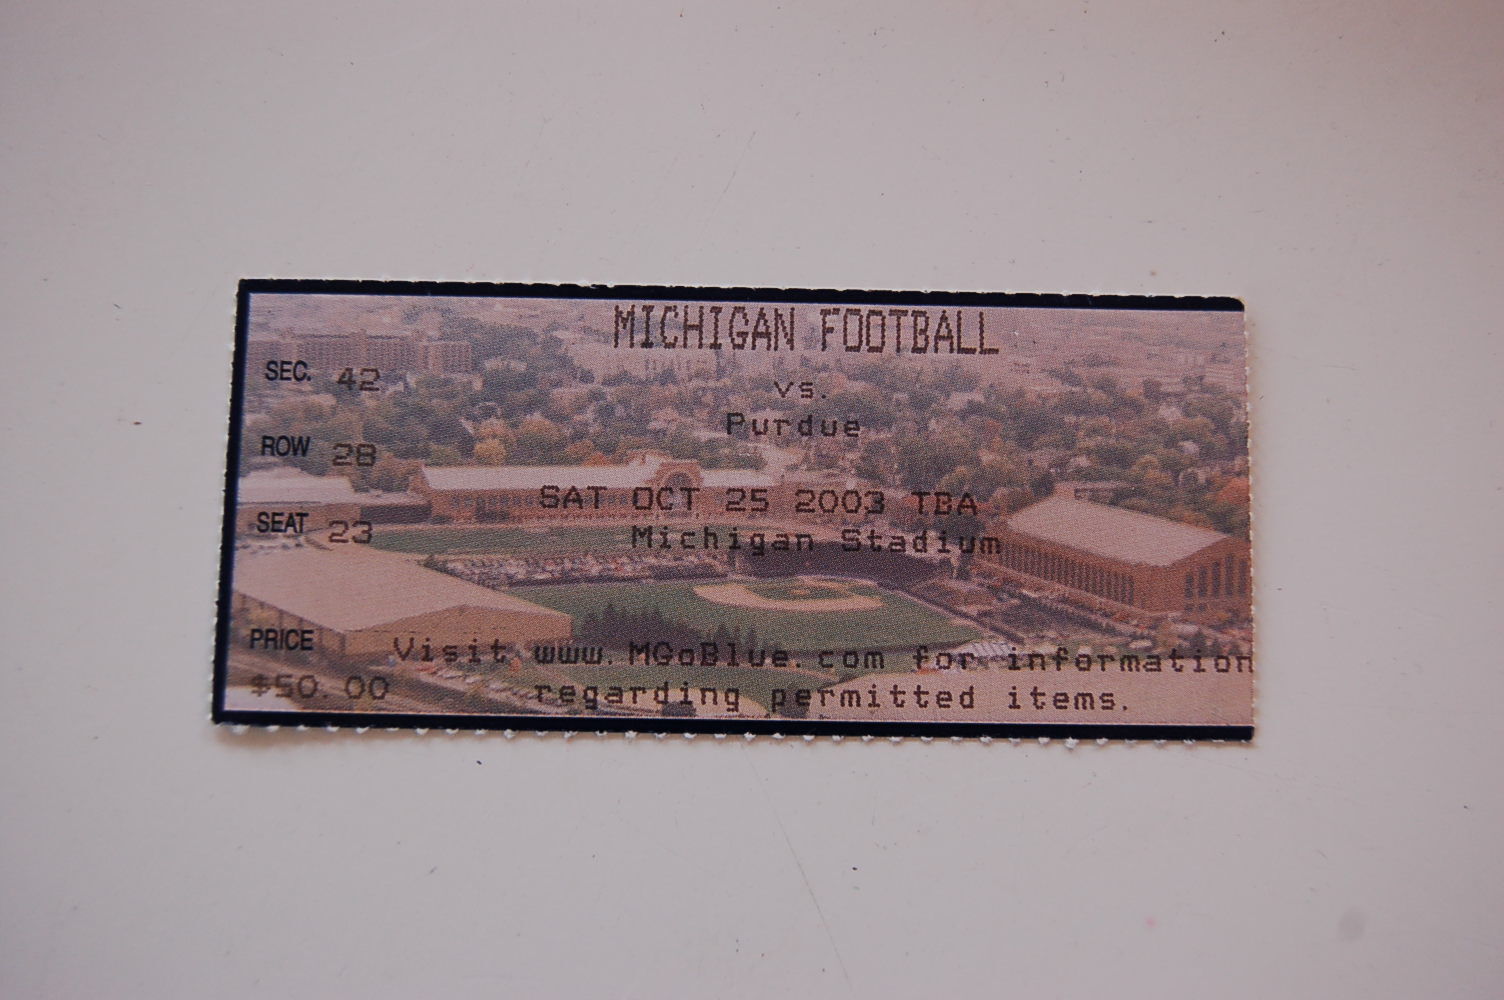 2003 Michigan - Purdue Football Ticket